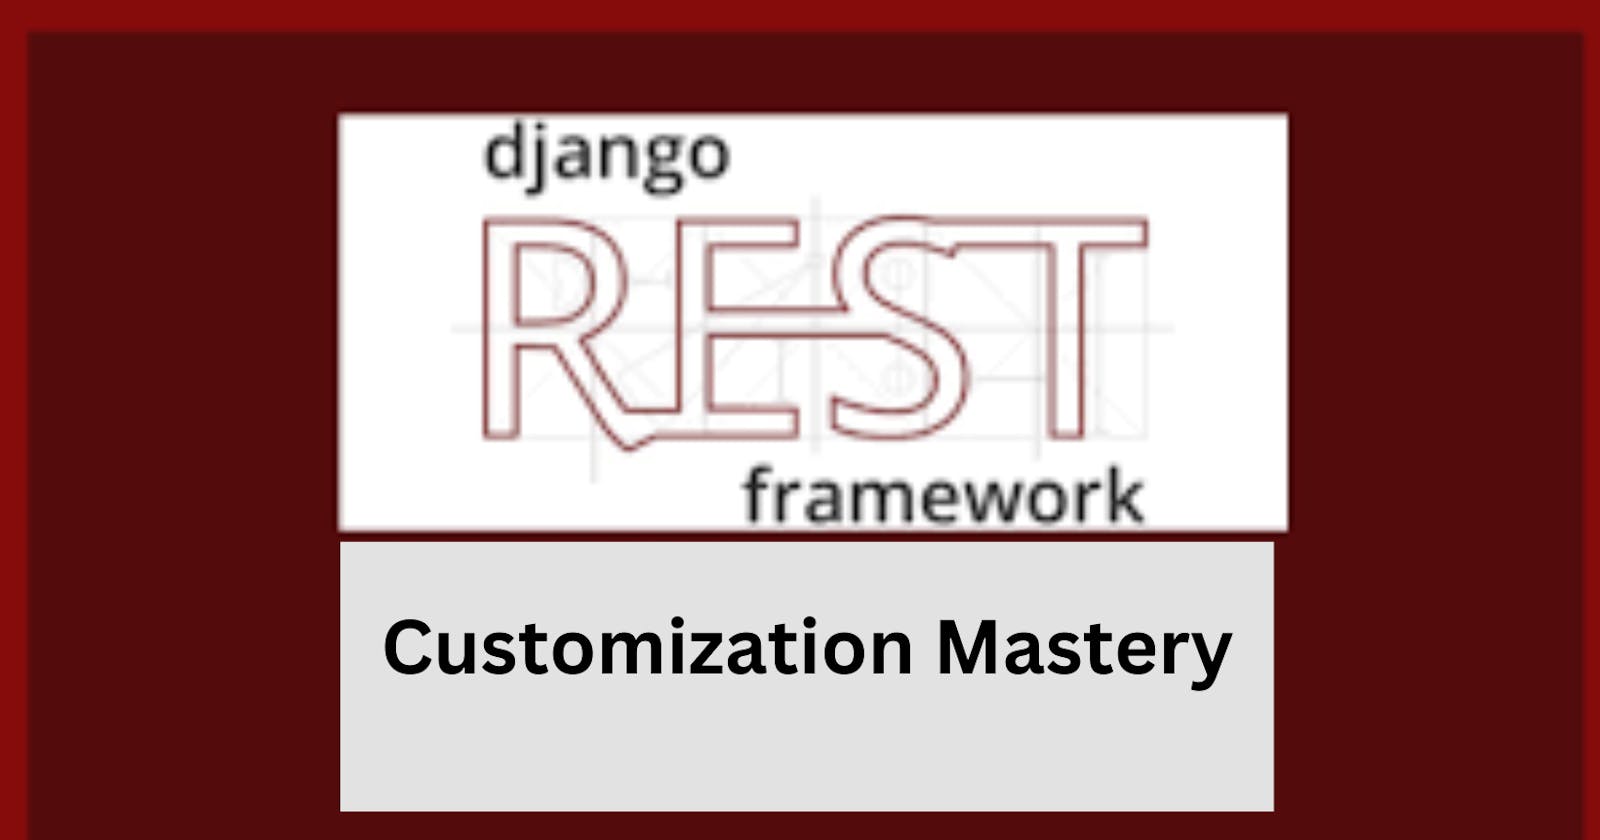 Django Rest Framework Customization Mastery